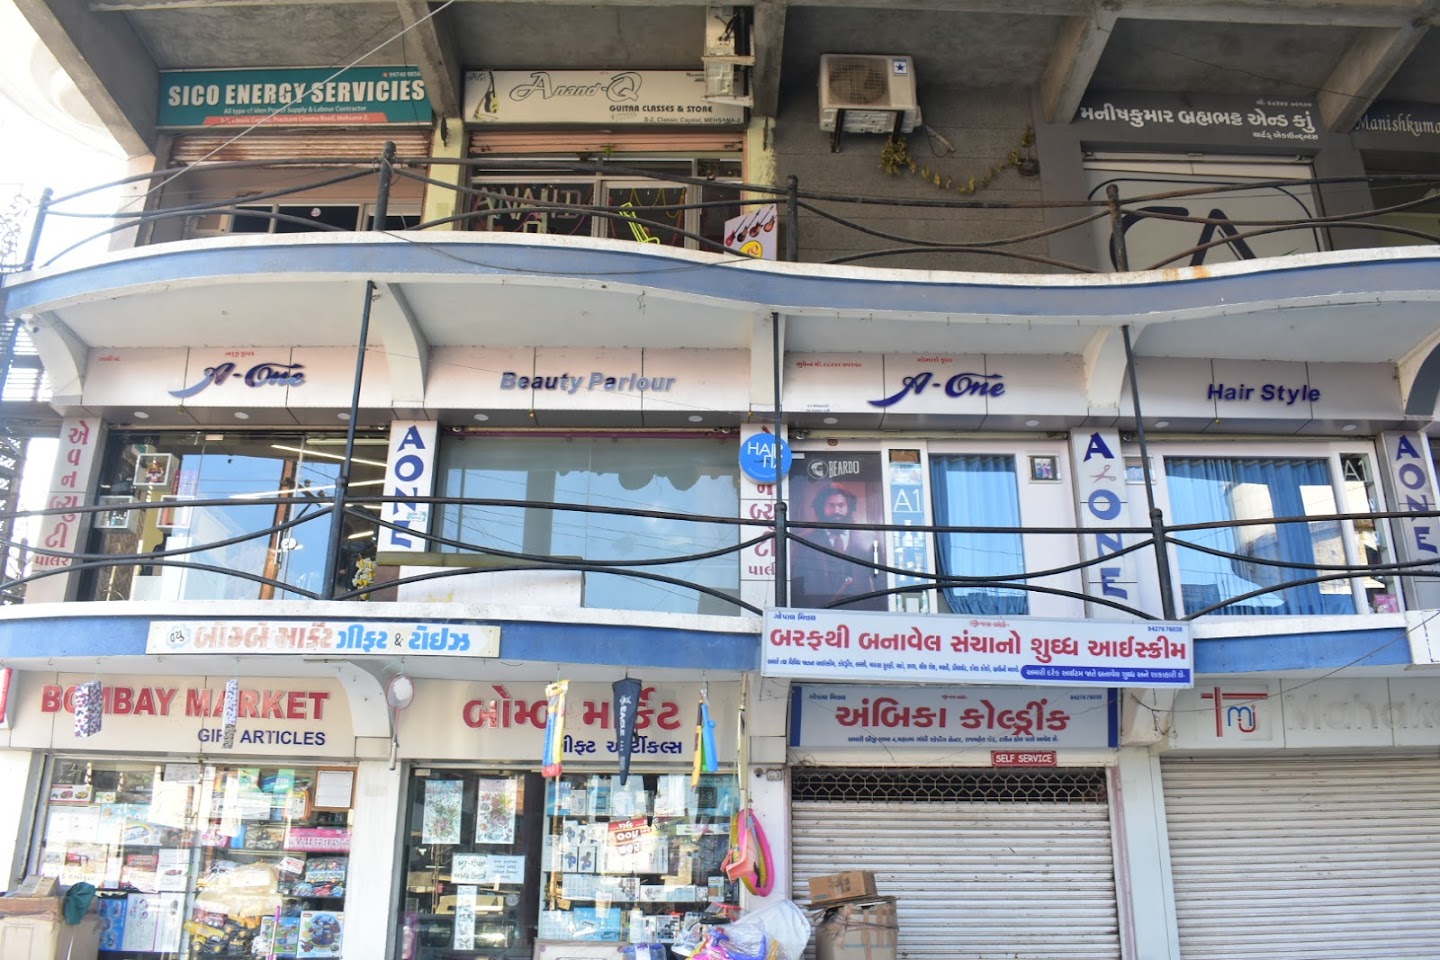 A-One Hair Salon - Barber shop in Mehsana